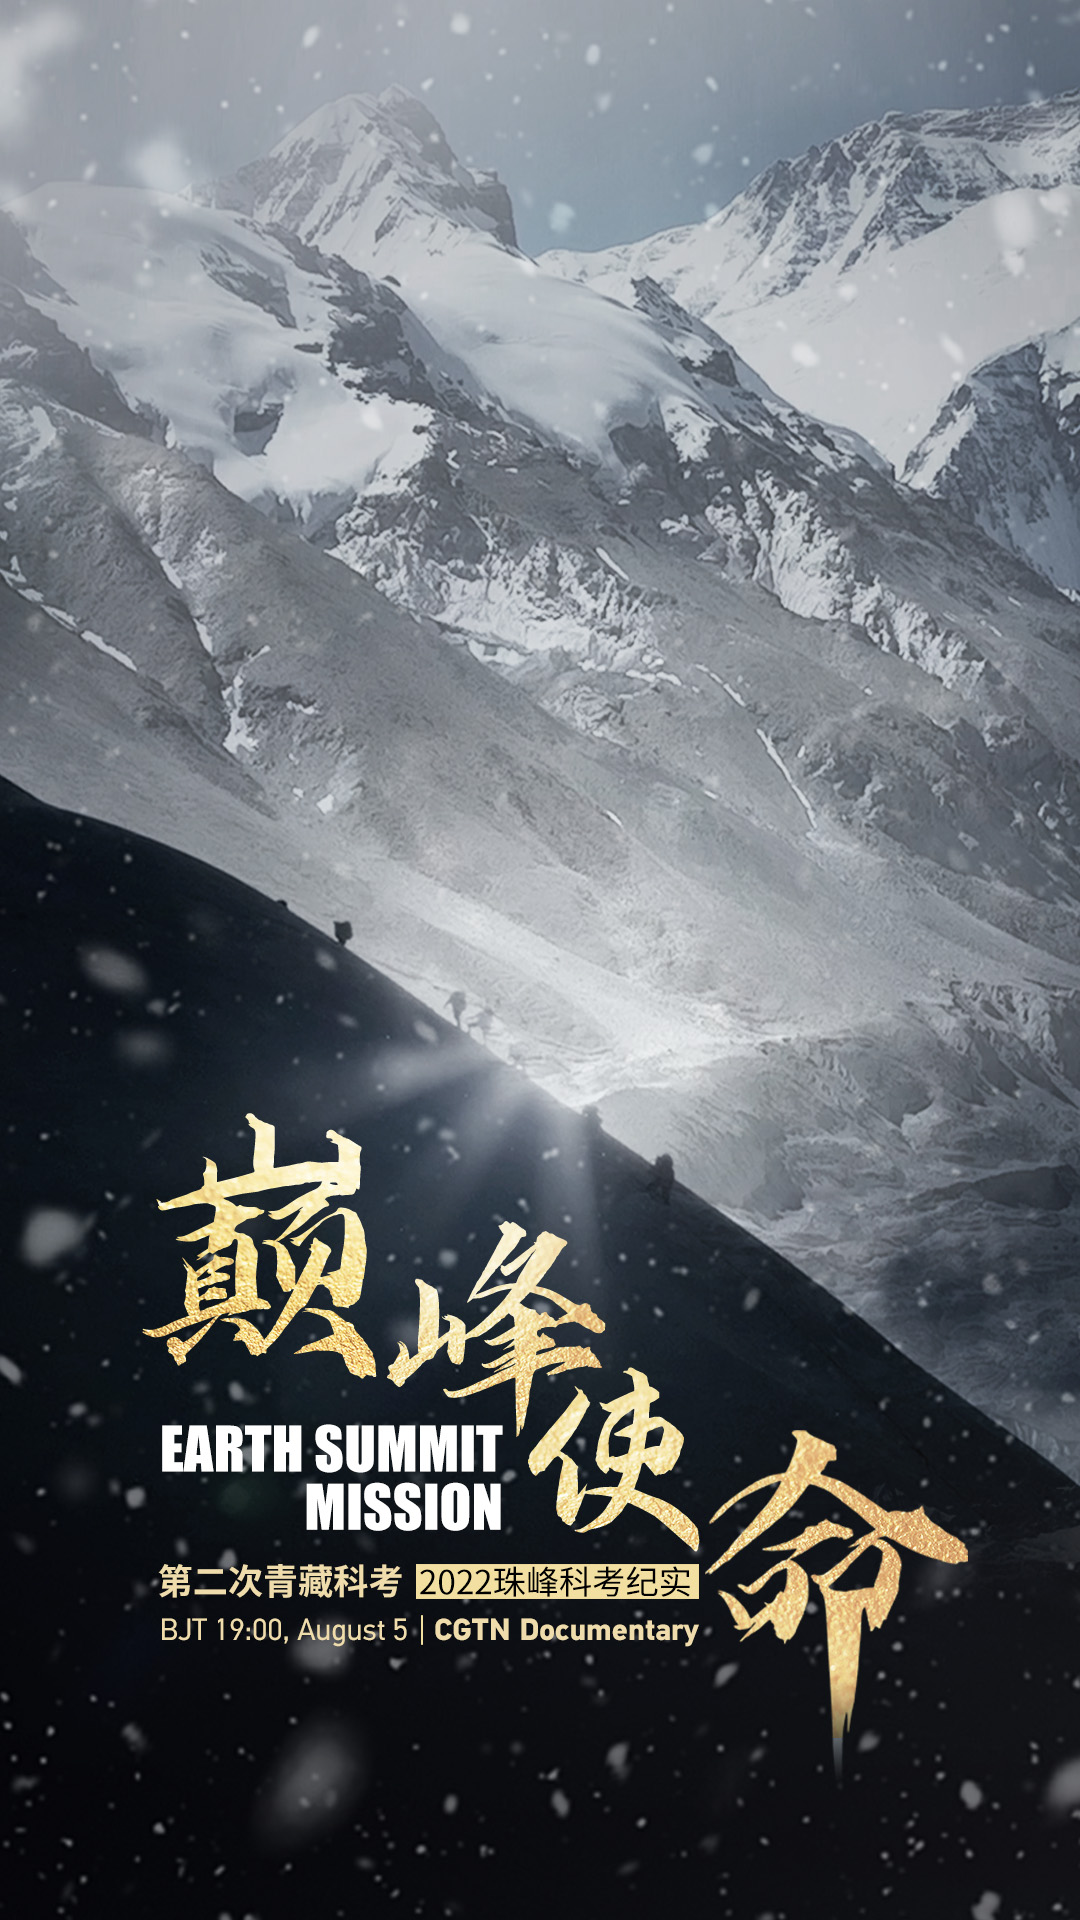 Earth Summit Mission